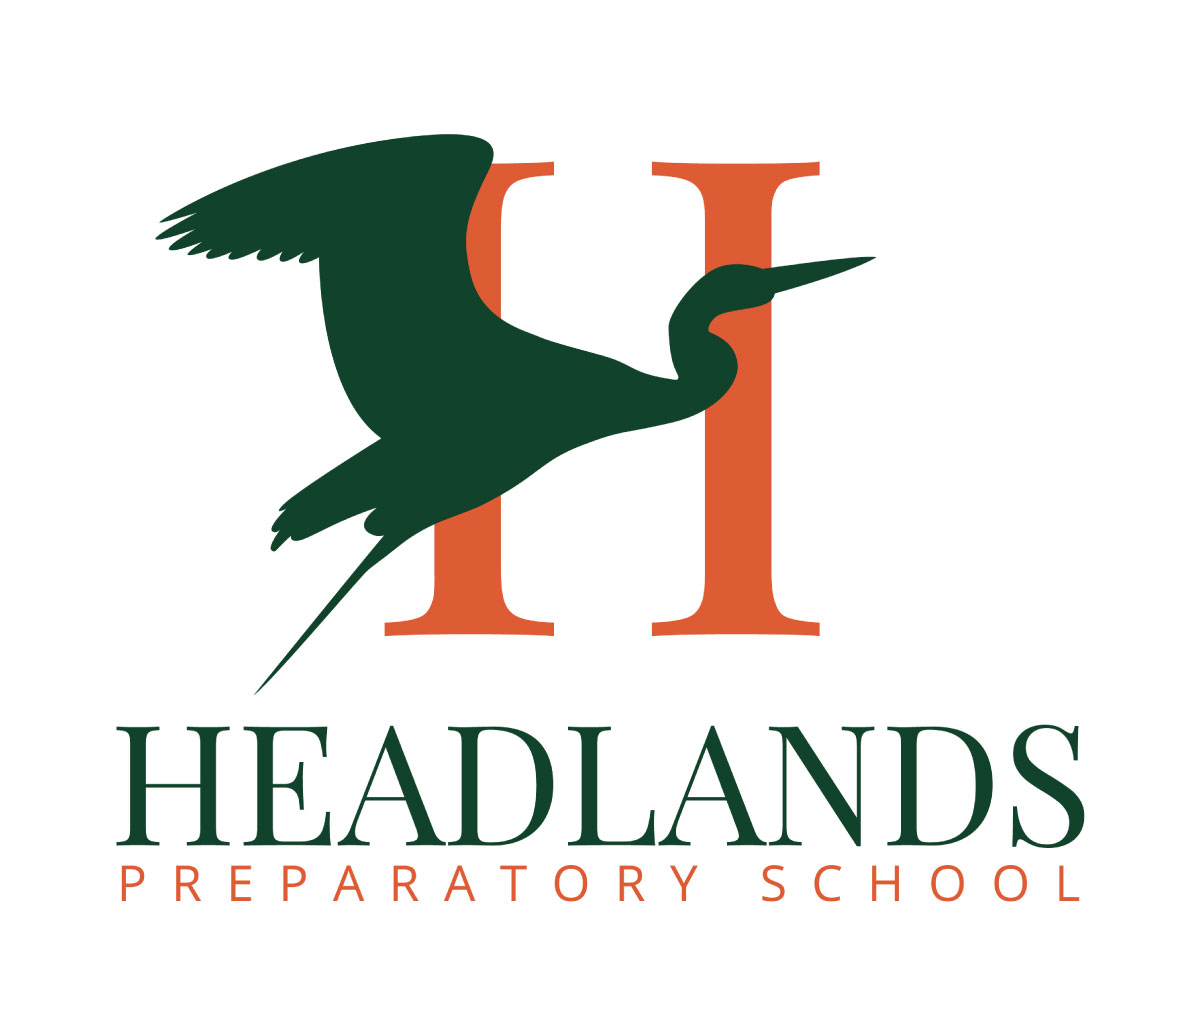 Headlands Preparatory